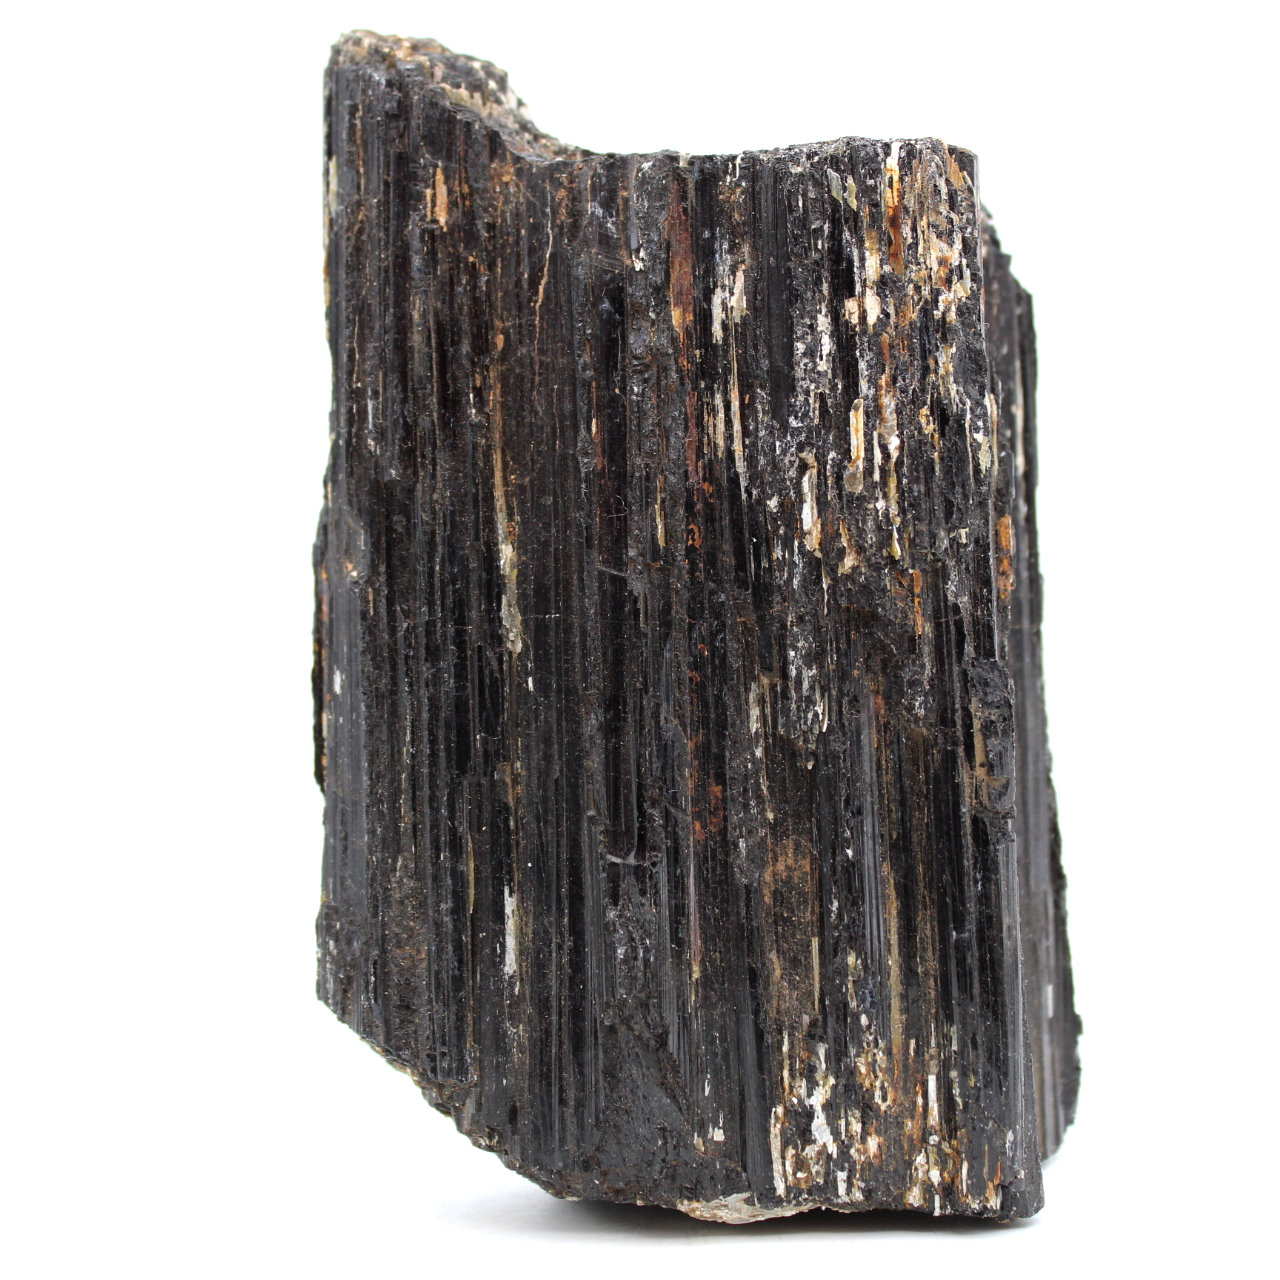 Crystallized black tourmaline